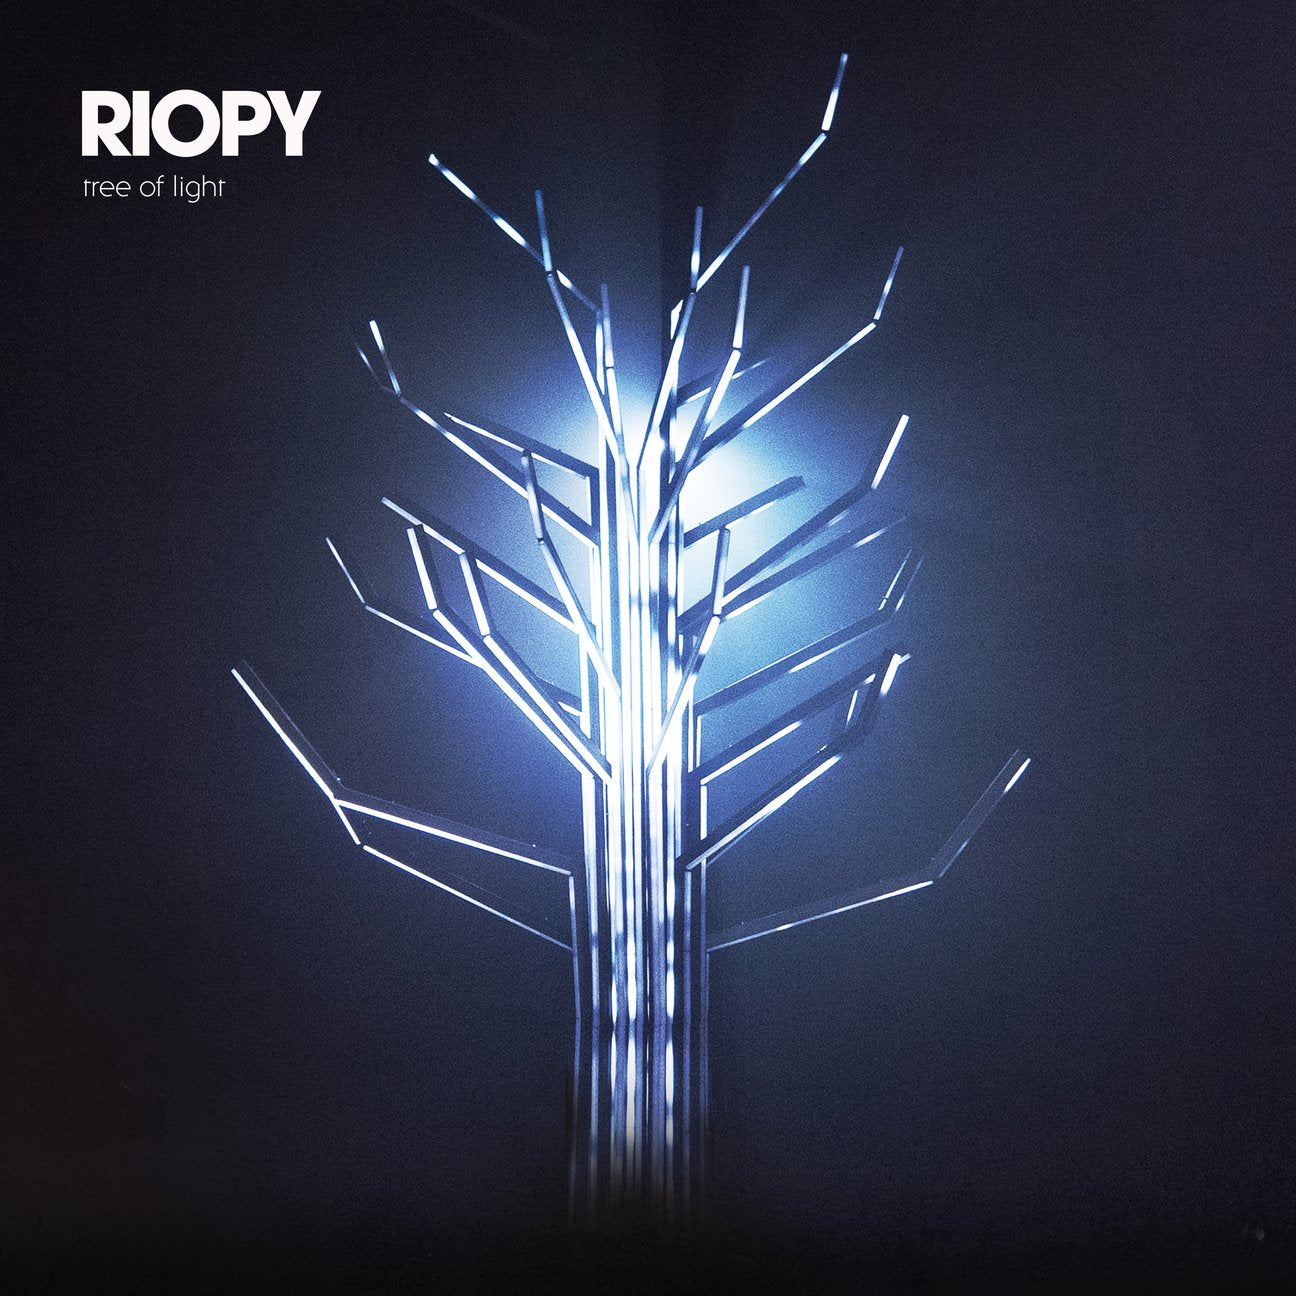 Blue Kingdom music sheet from RIOPY's Tree of Light album